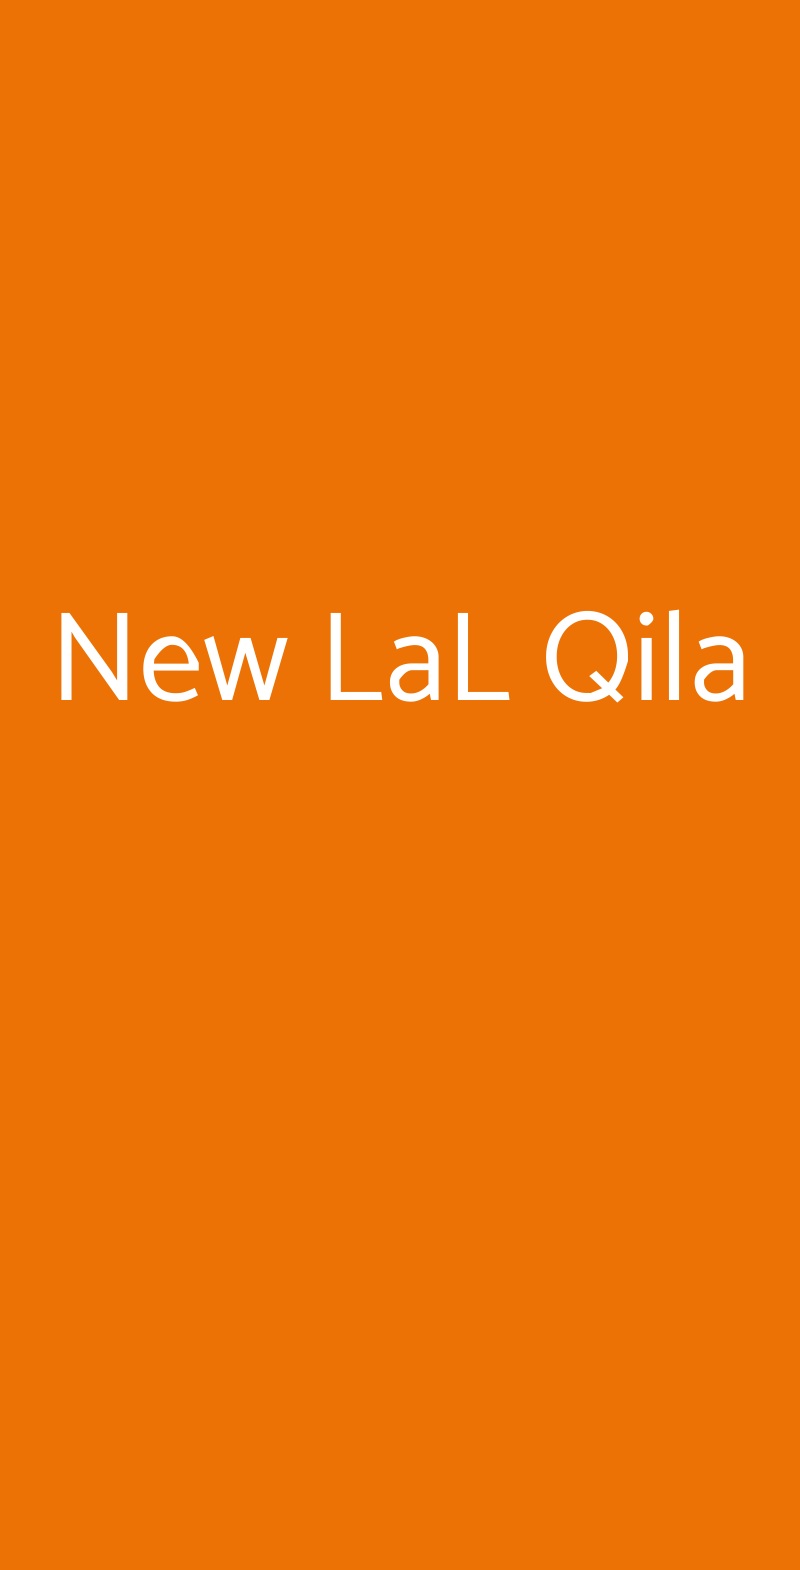 New LaL Qila Livorno menù 1 pagina